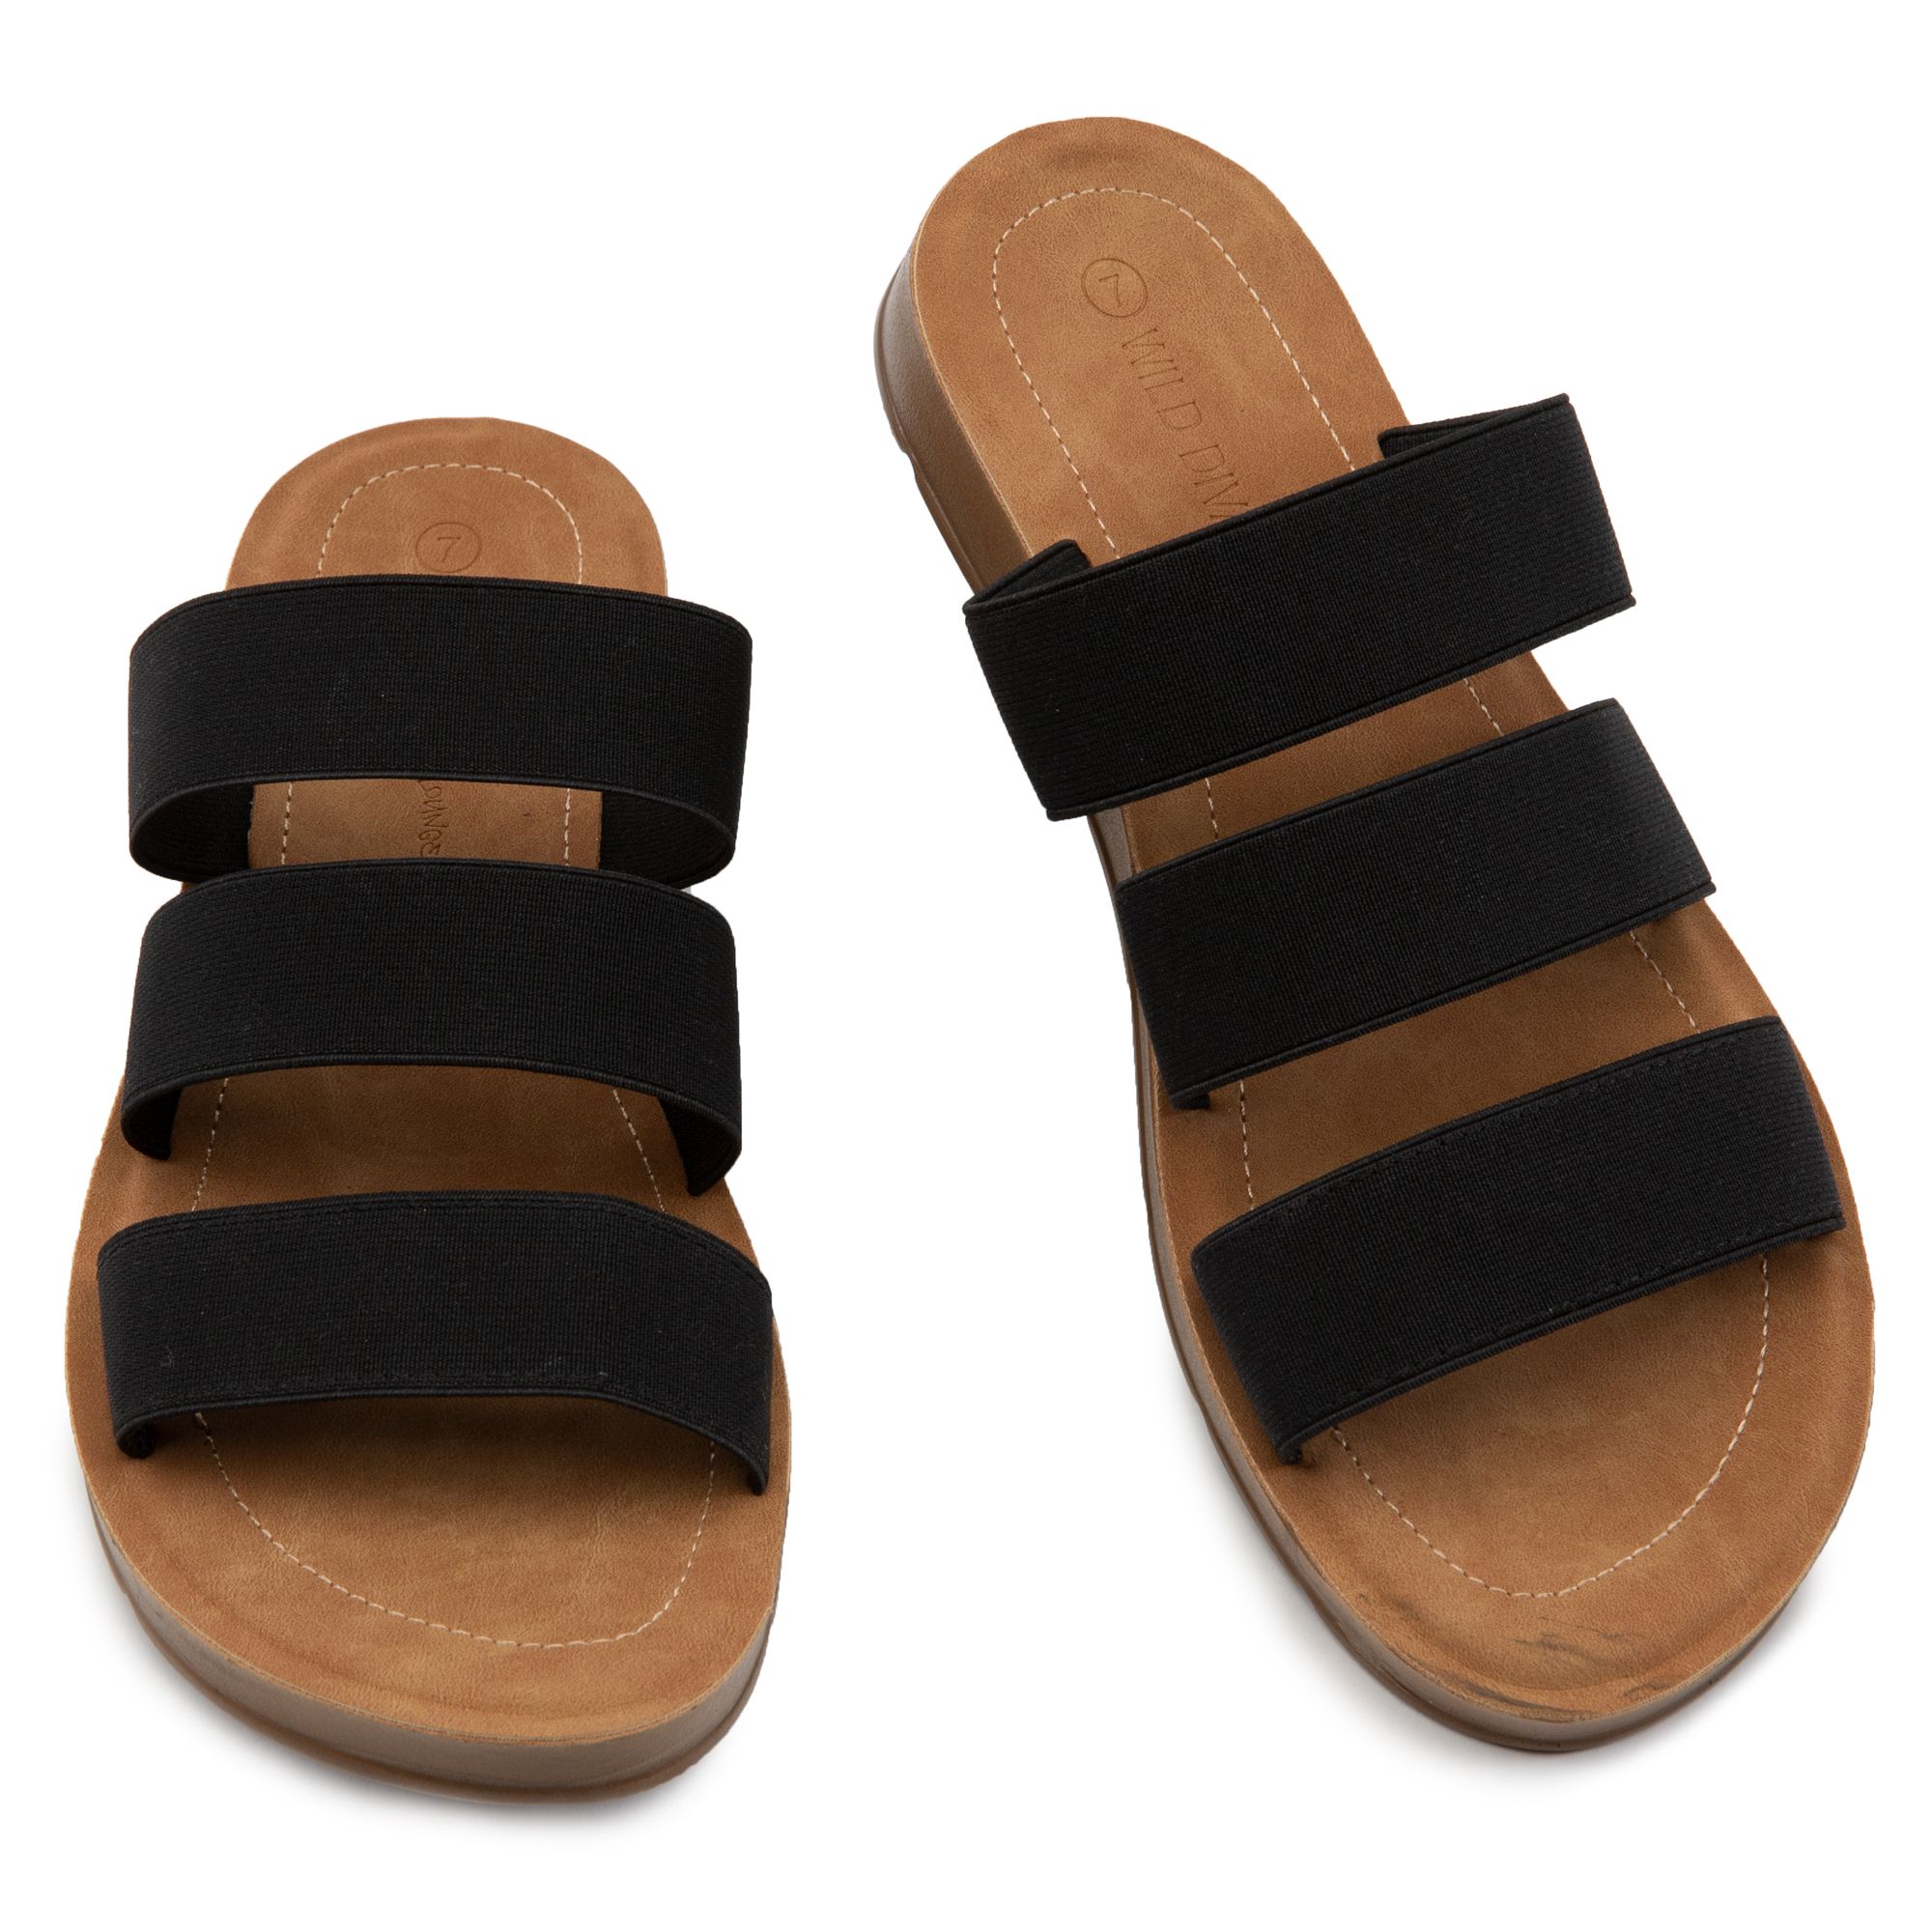 3 strap black sandals